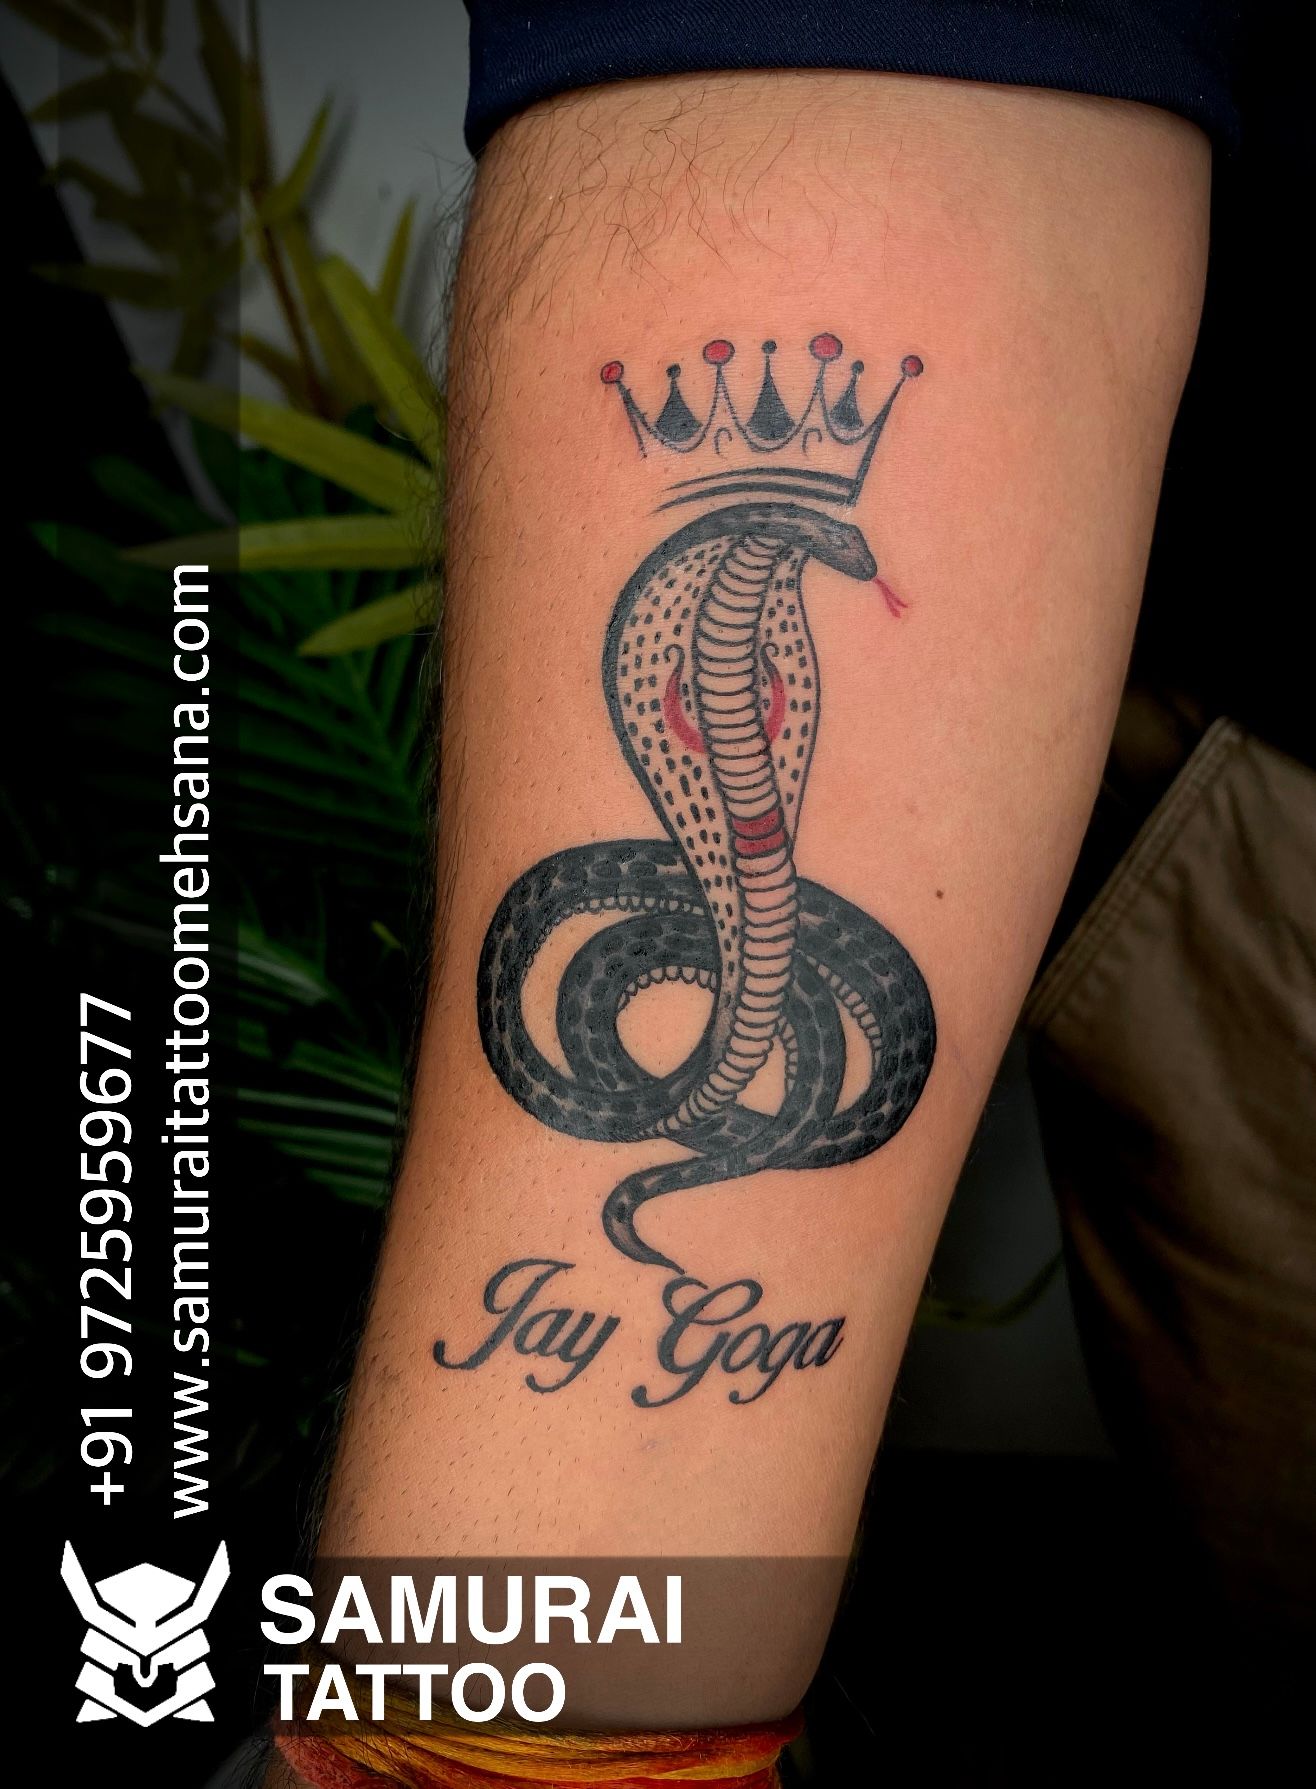 Jay Goga name tattoo  Tattoos Blouse designs high neck Name tattoo